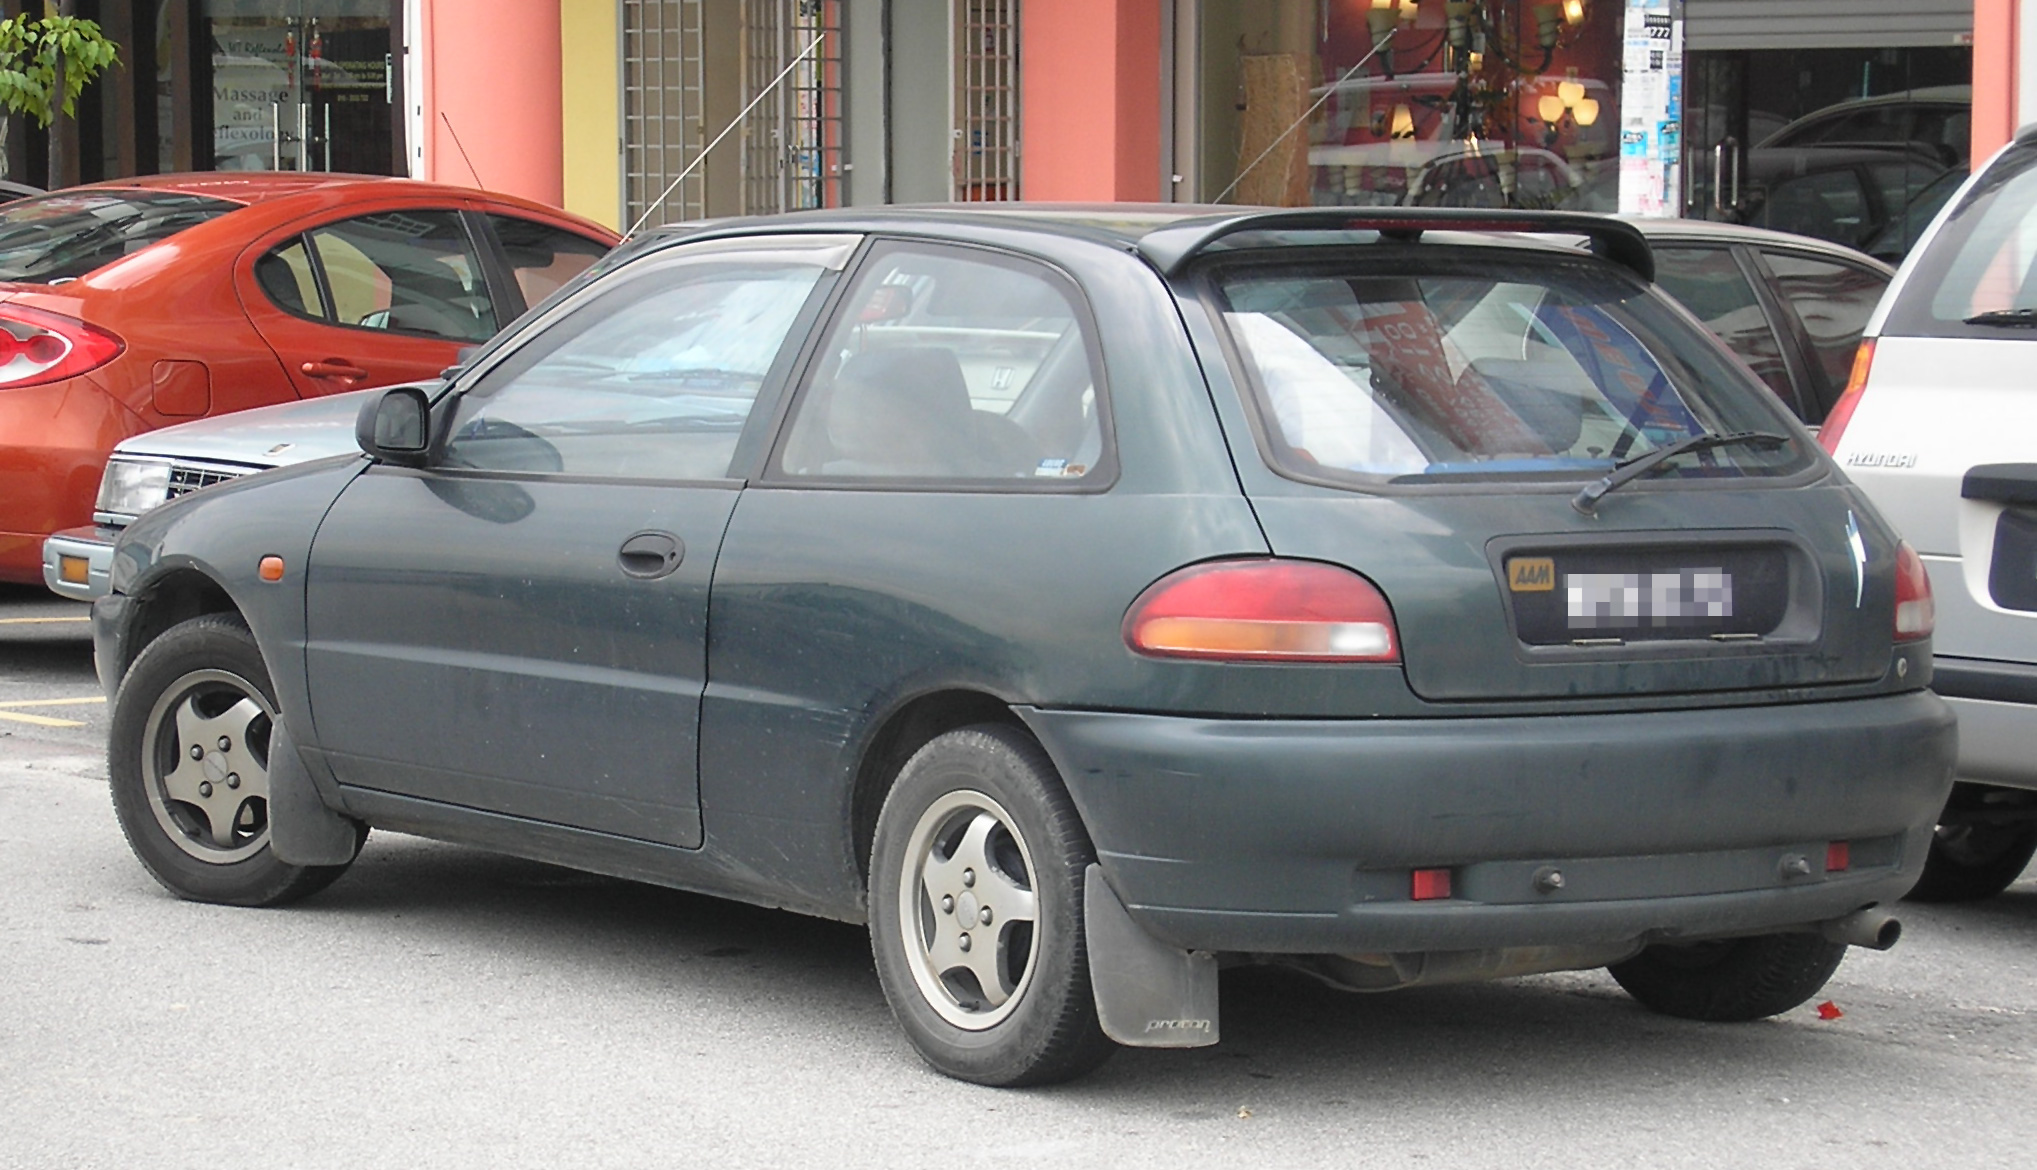 File:Proton Satria (second generation) (rear), Serdang.jpg ...